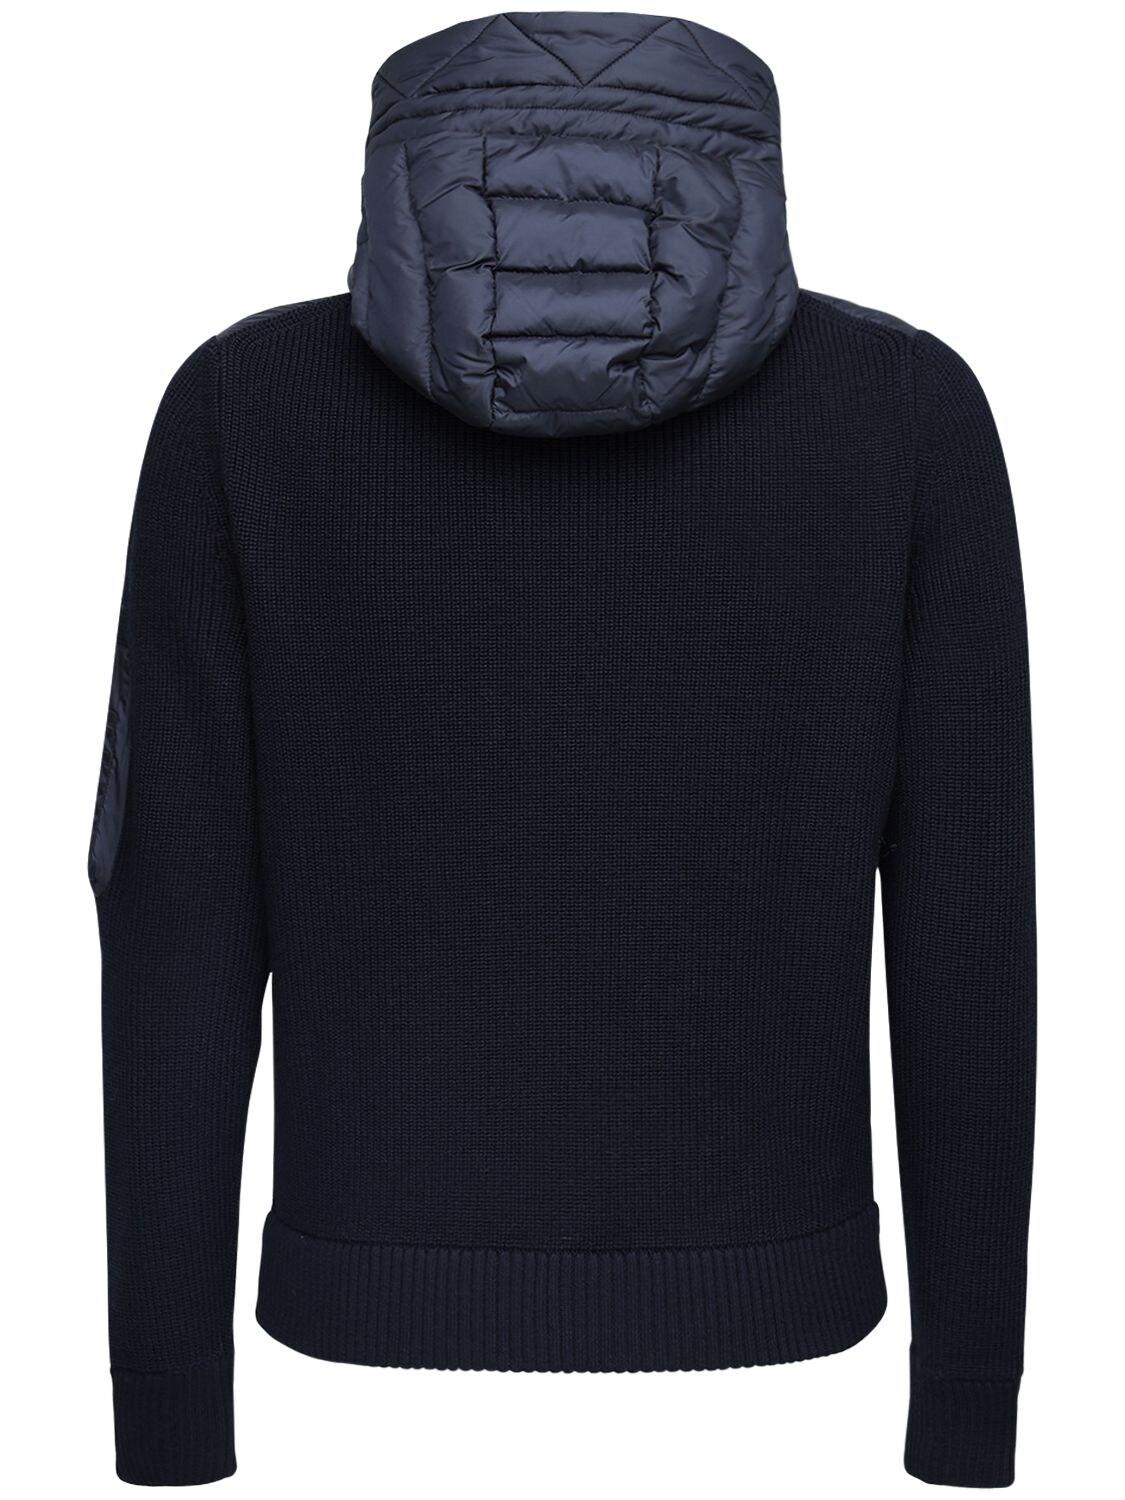 Moncler Wool-blend Down Jacket in Navy (Blue) for Men - Save 58 